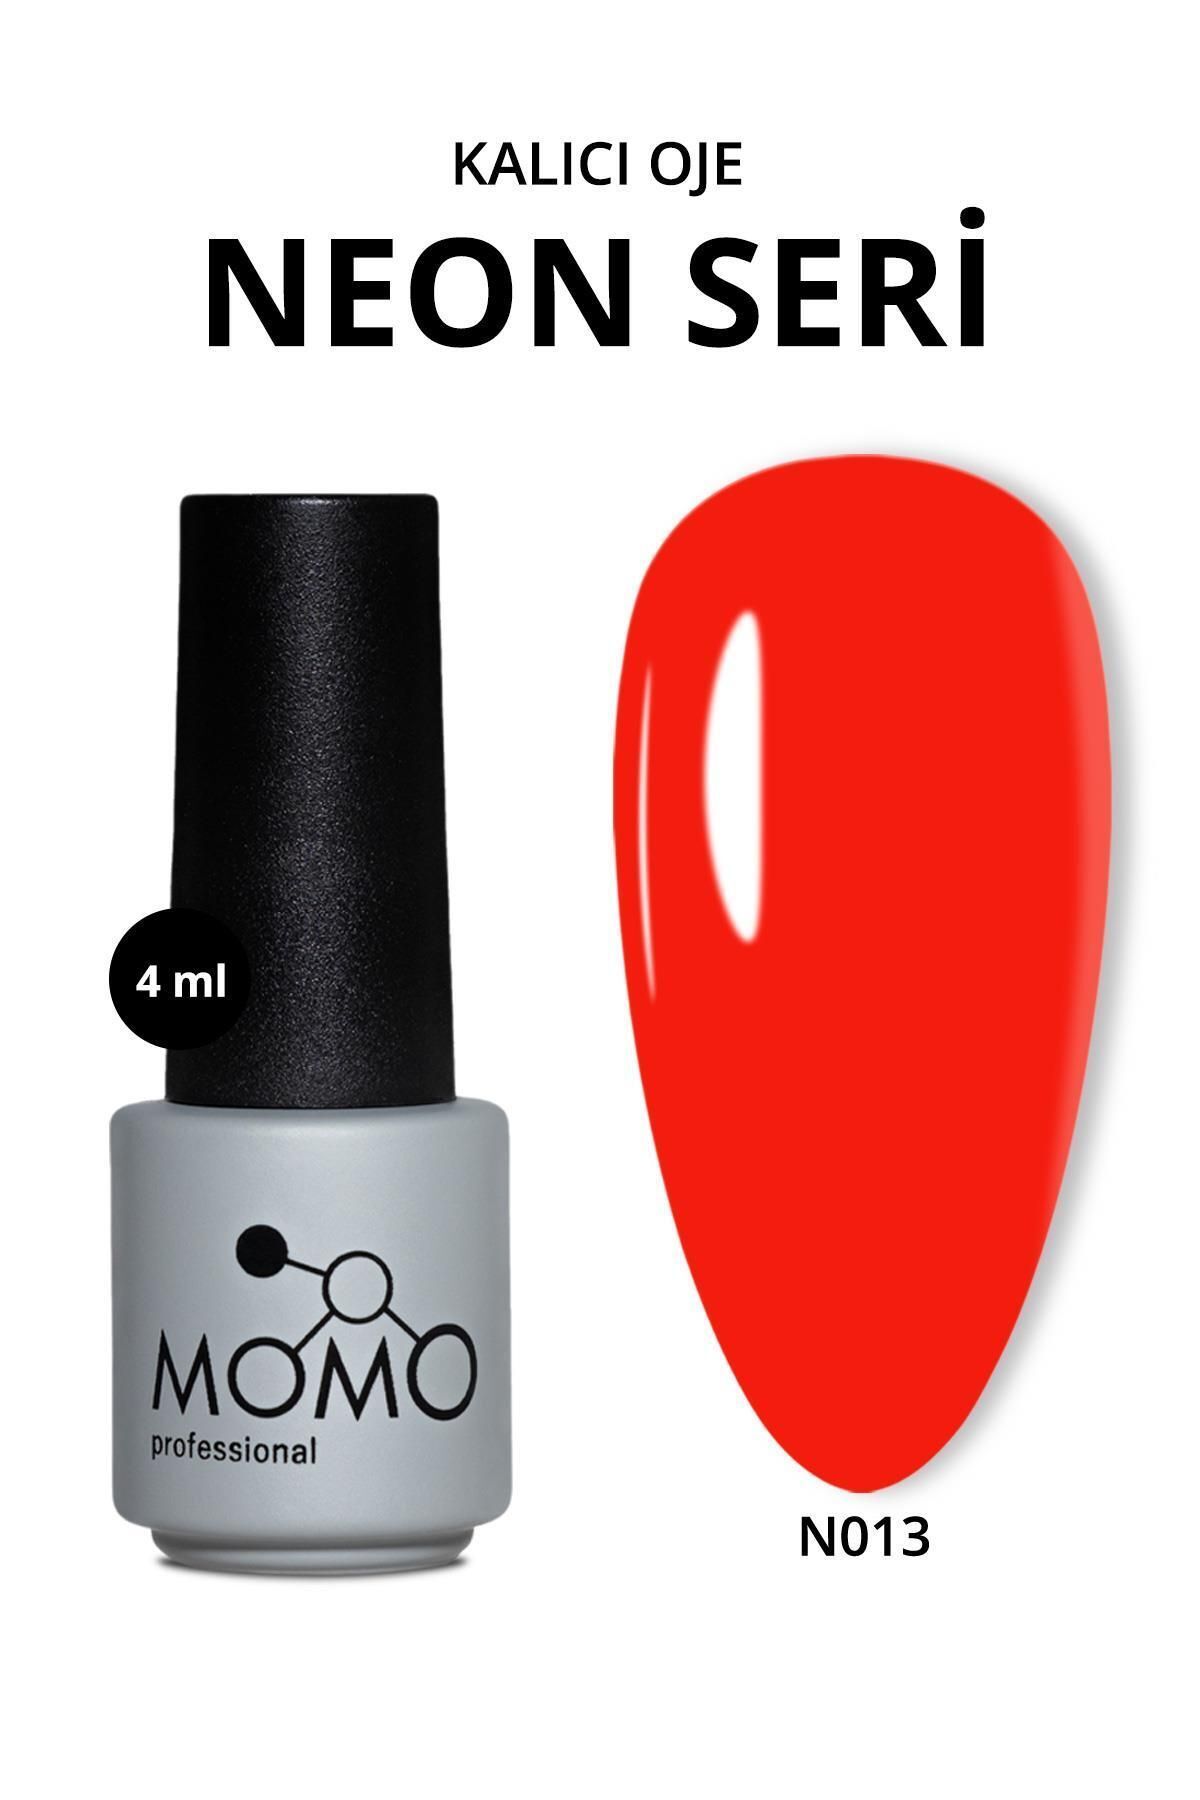 MOMO professional Kalıcı Oje N013, Neon, 4 ml